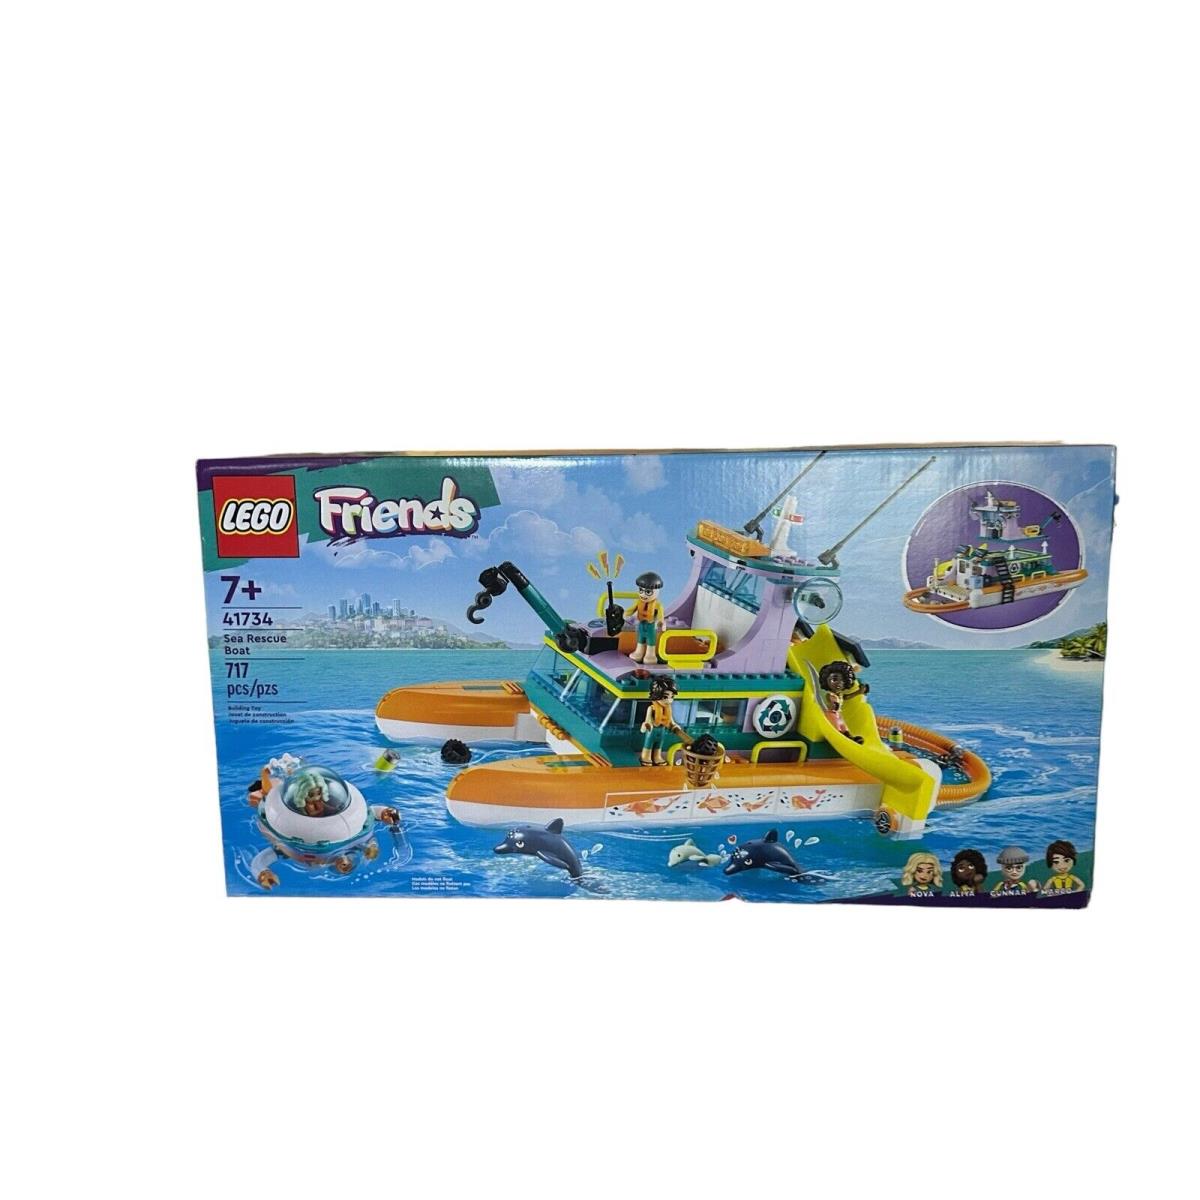 Lego Friends Sea Rescue Boat 41734 -717 Pcs Set 6425655